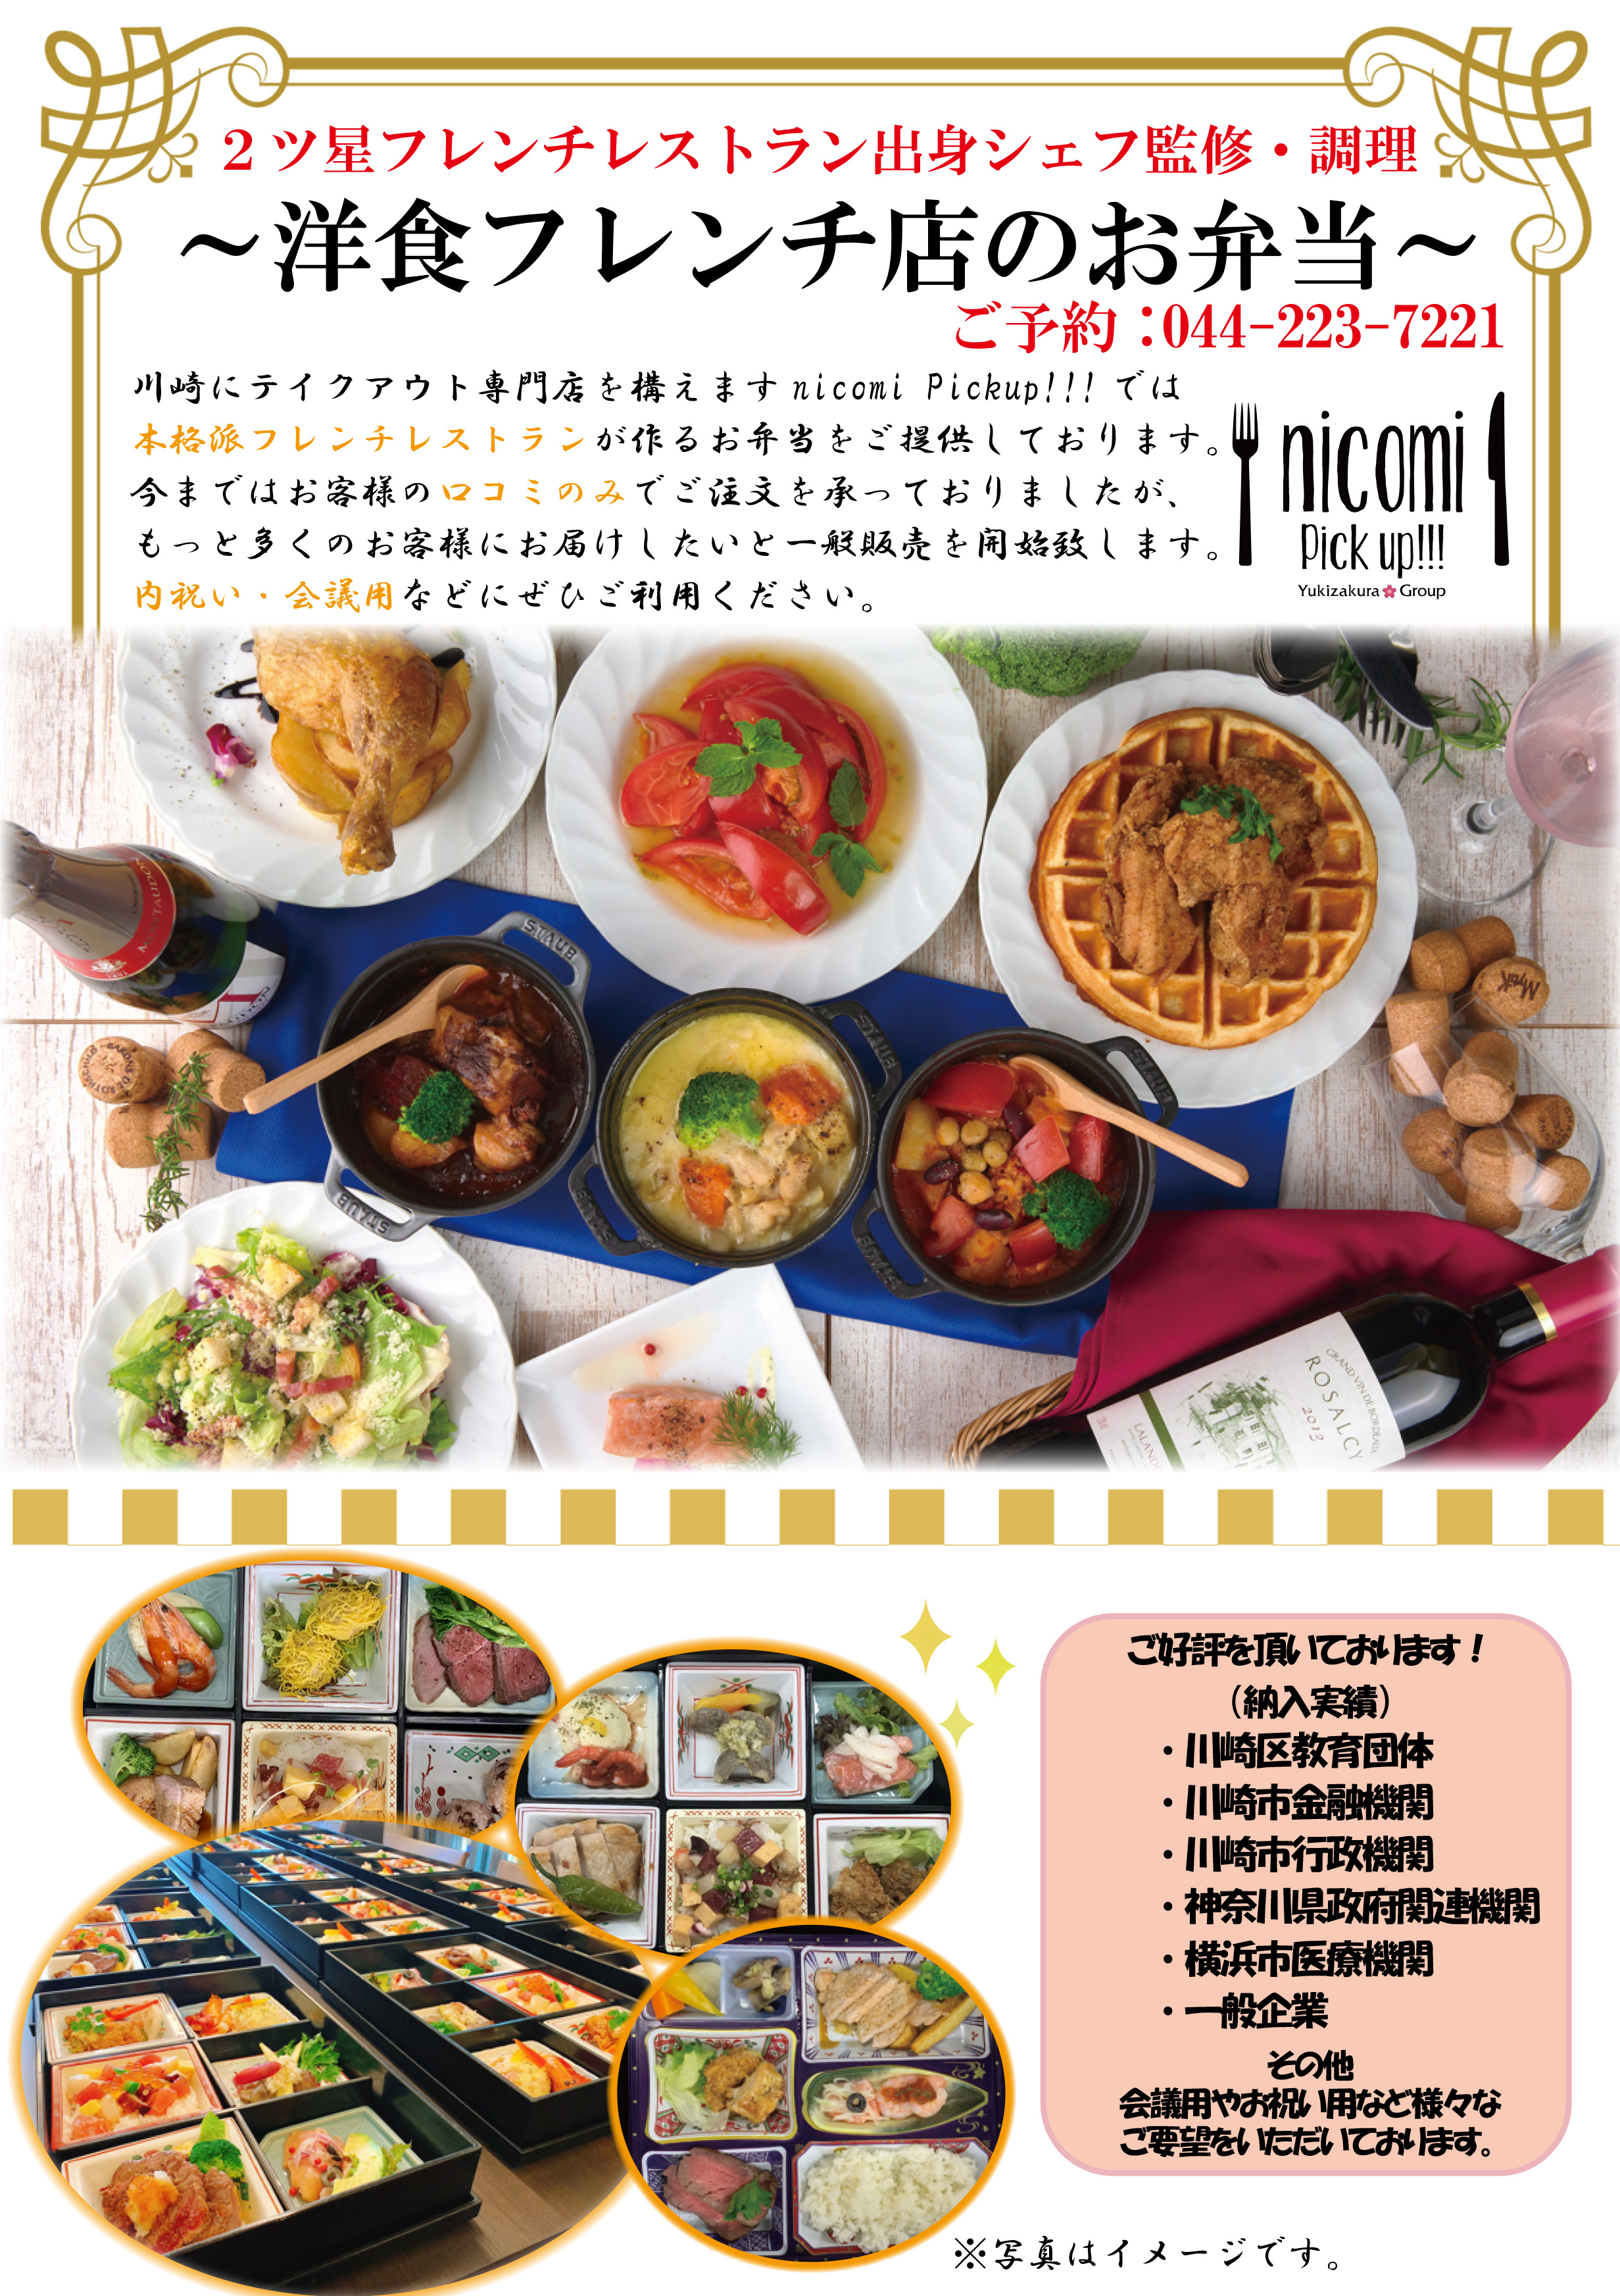 Nicomi Pick Up 川崎 京町商店街 フレンチと洋食のデリバリー テイクアウト専門店